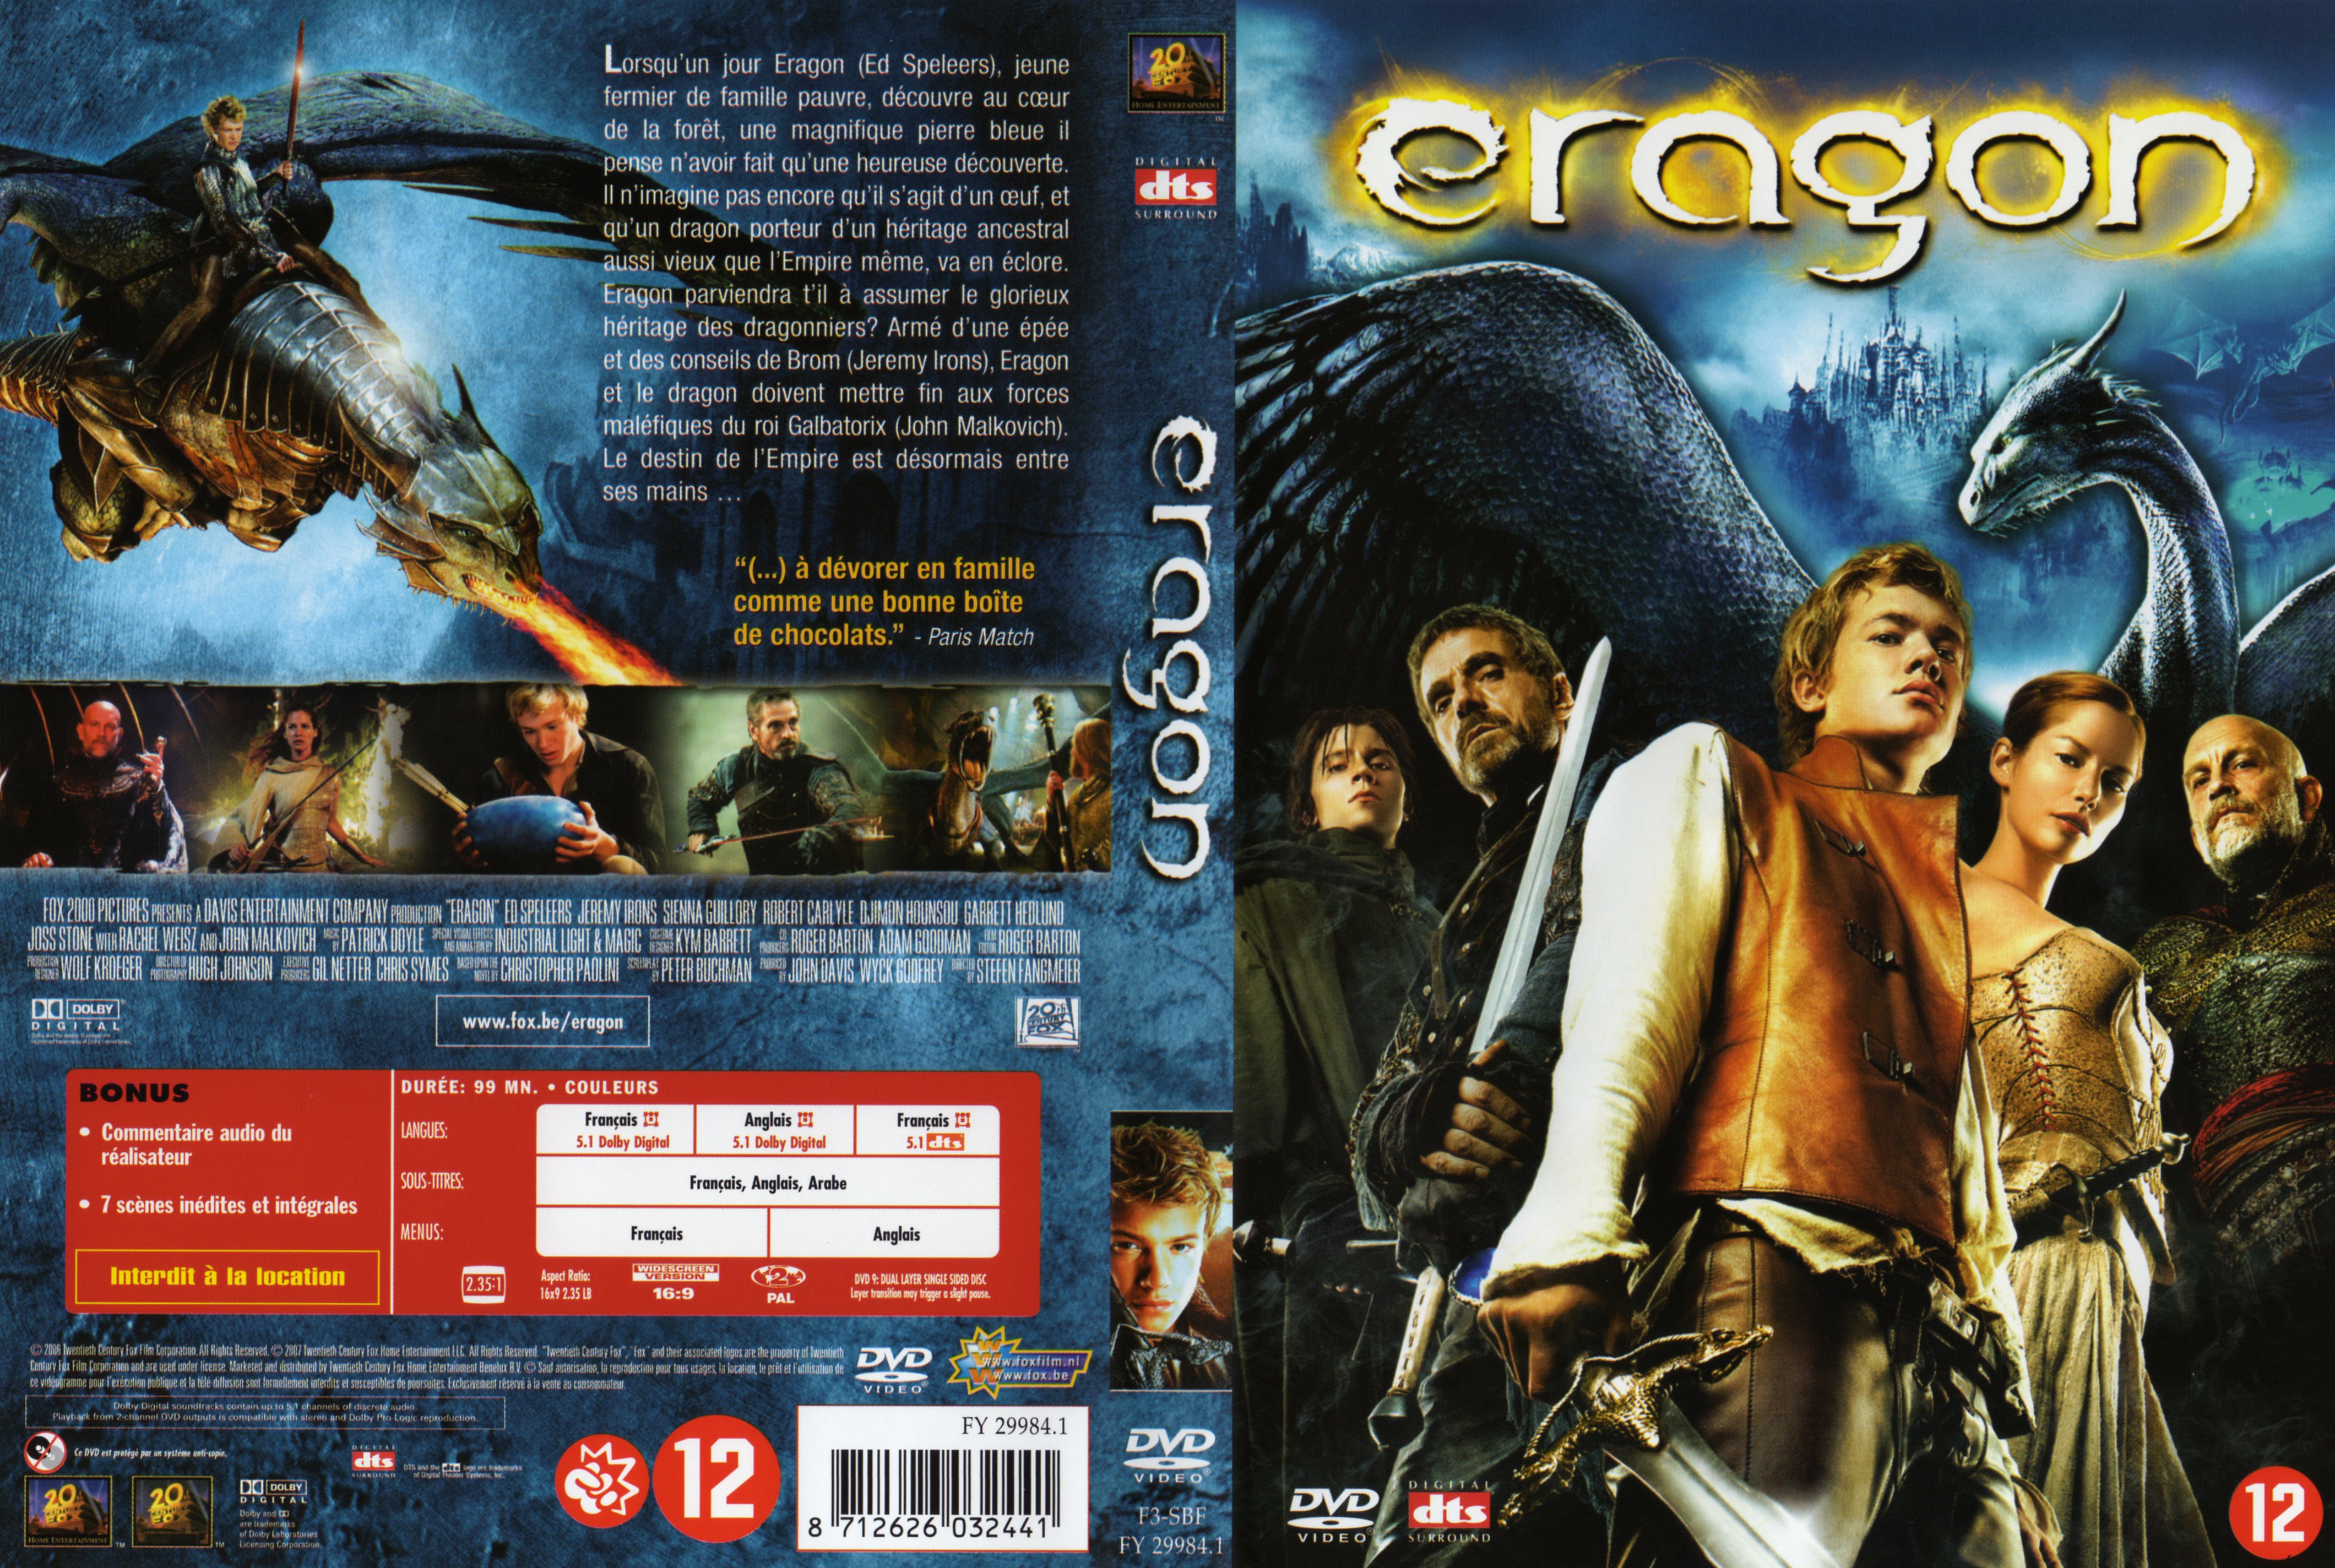 Jaquette DVD Eragon